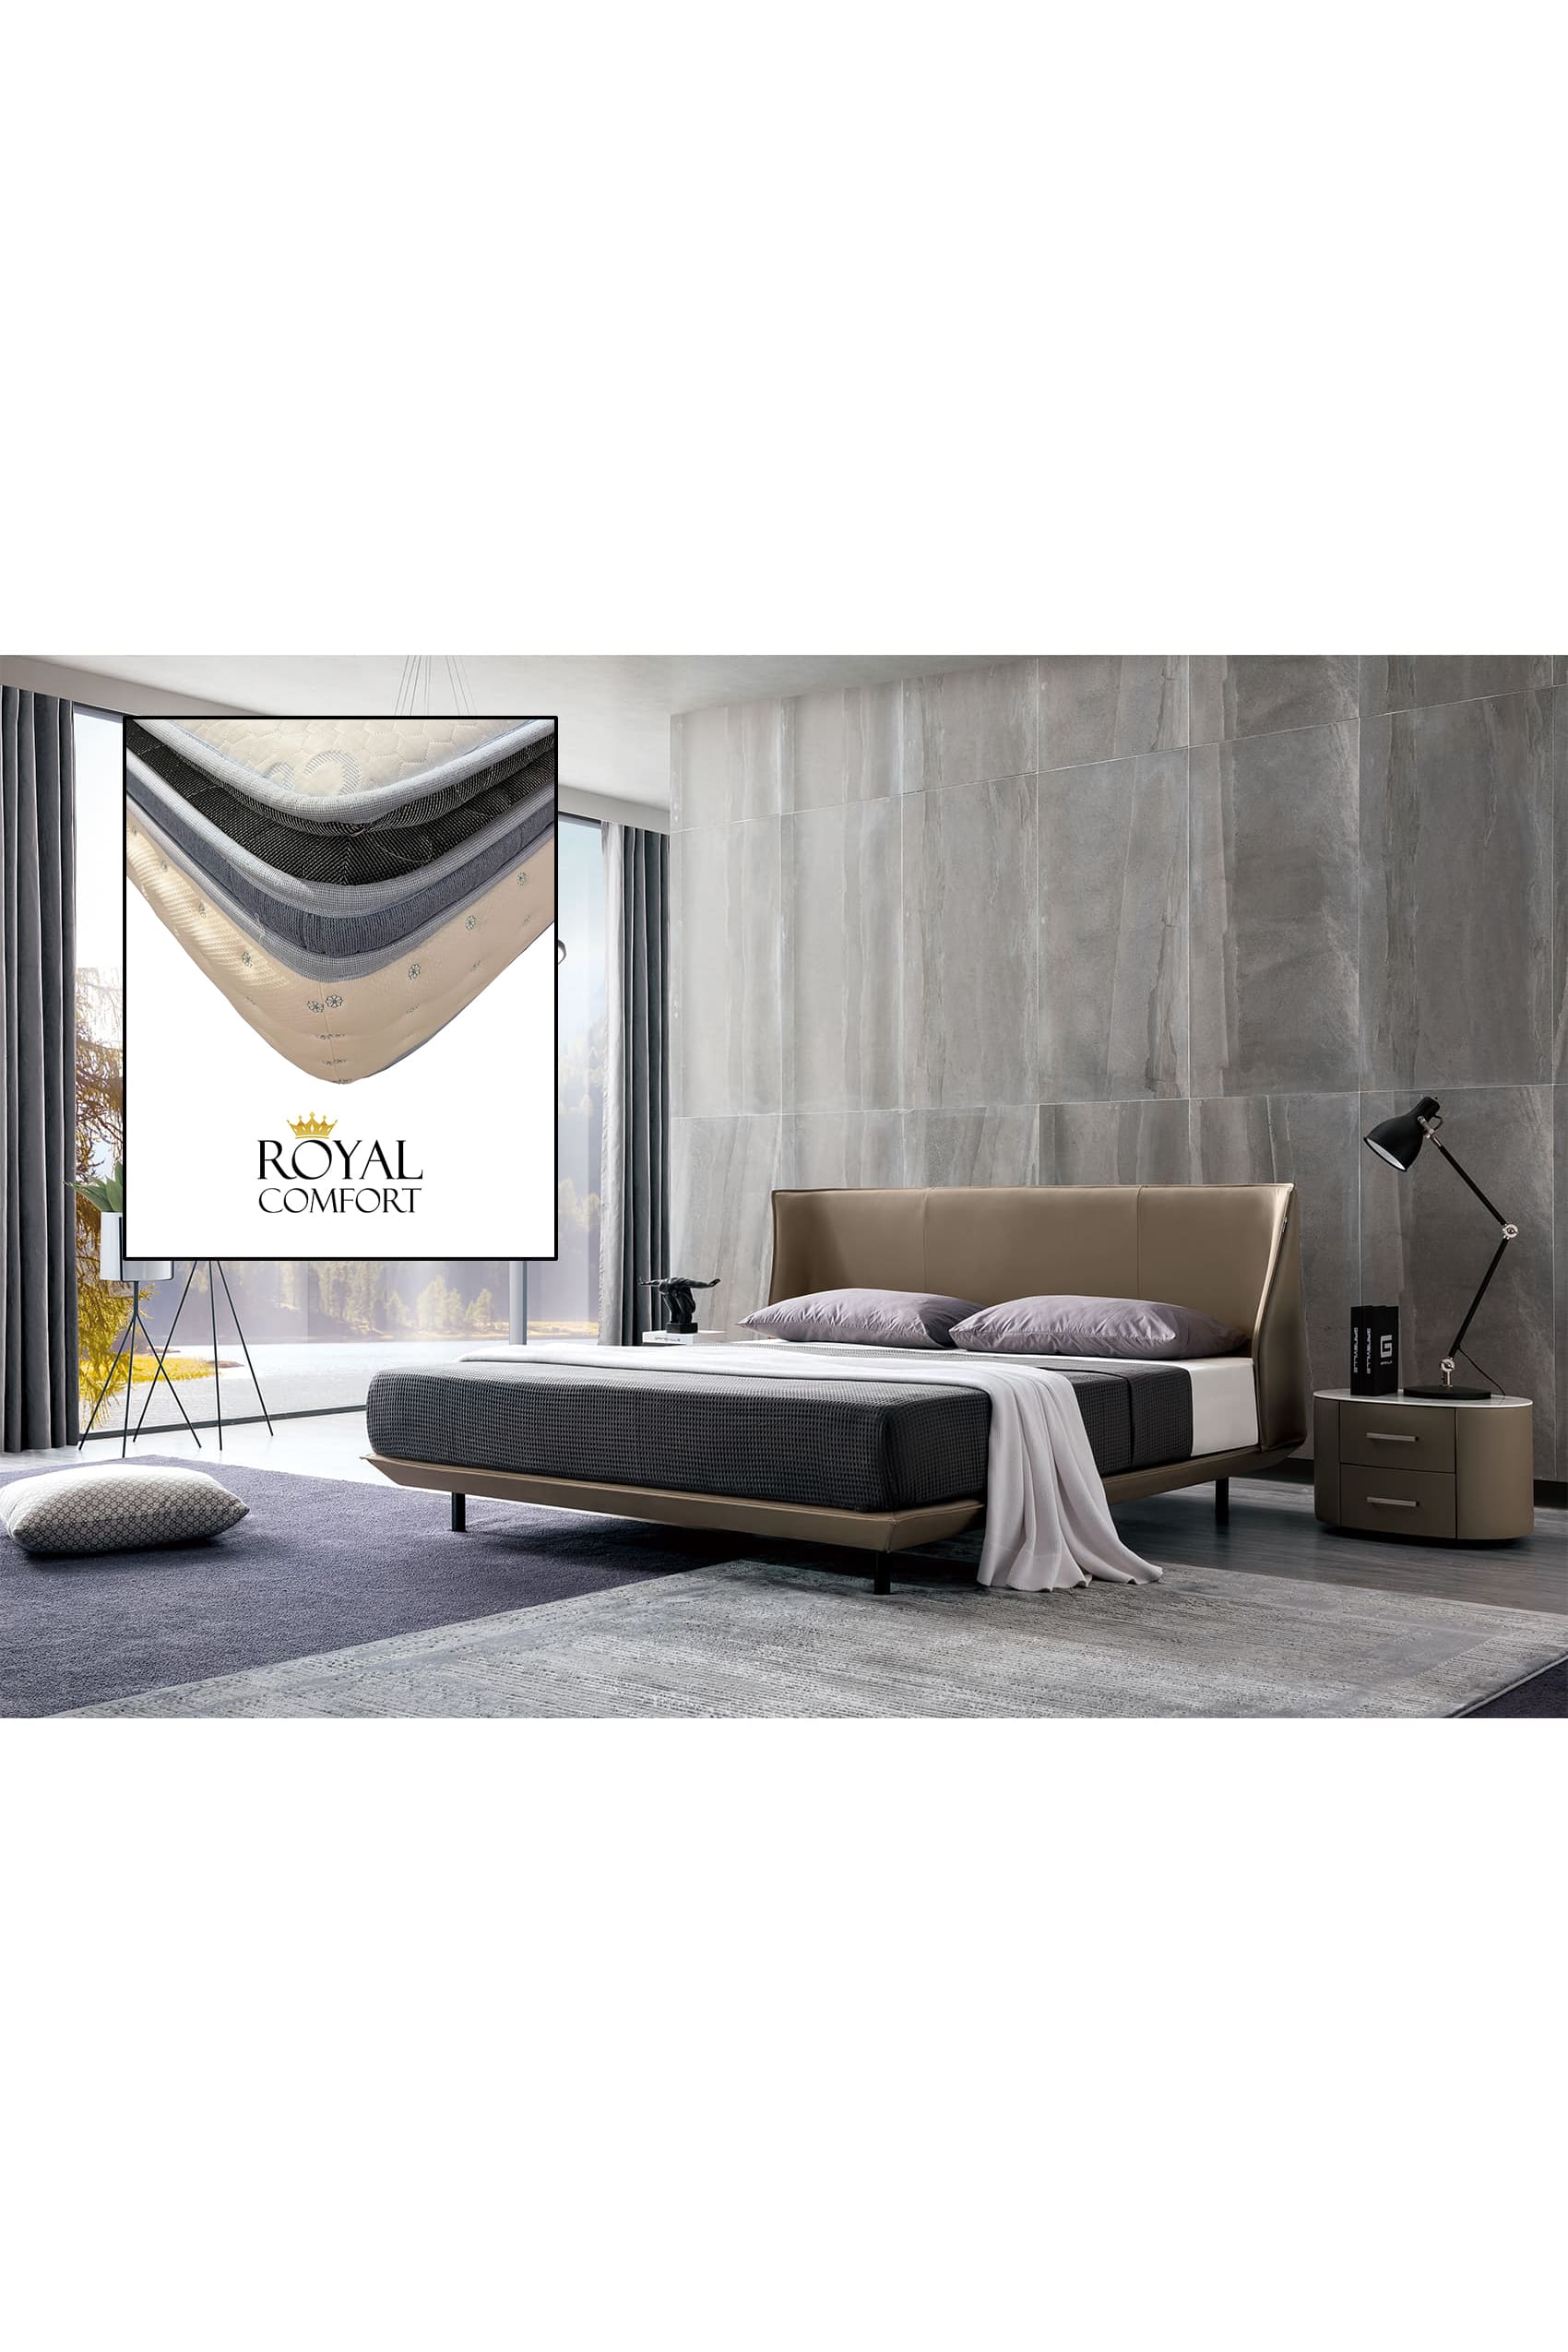 Zolano Designer Bed Frame + Royal Comfort Pillow Top Mattress